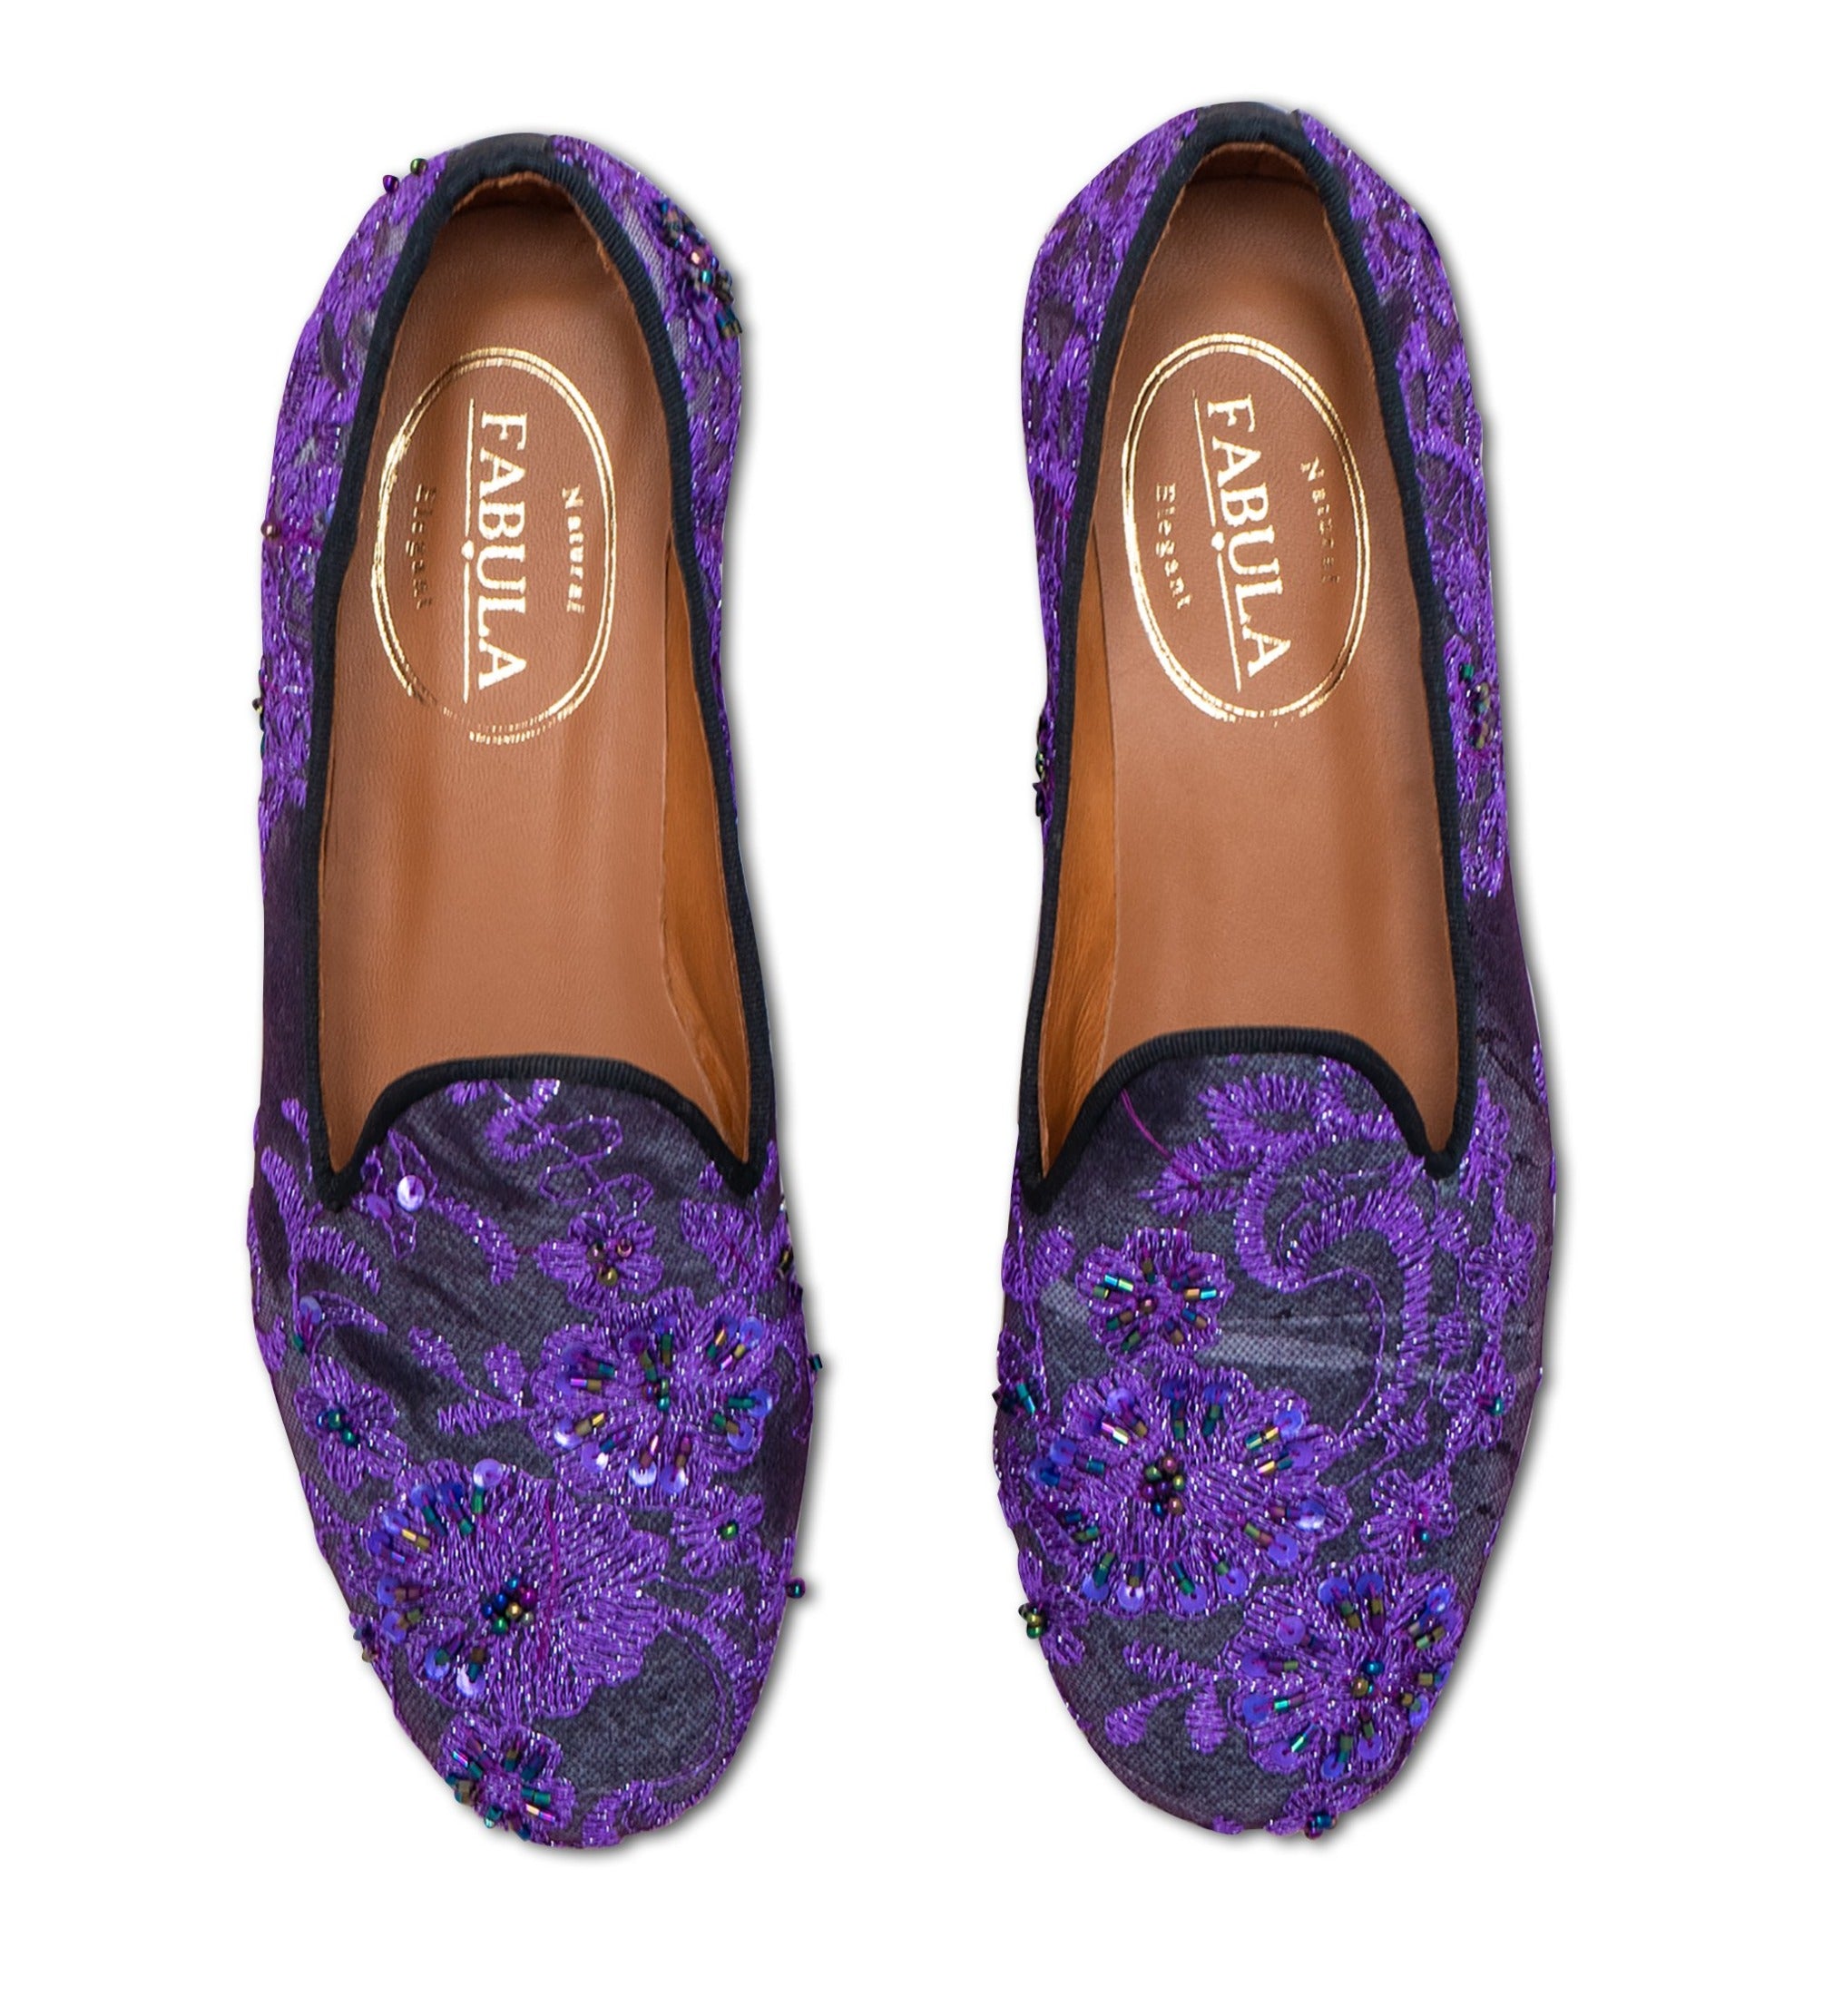 gray velvet slippers with handmade glittery purple embroidery